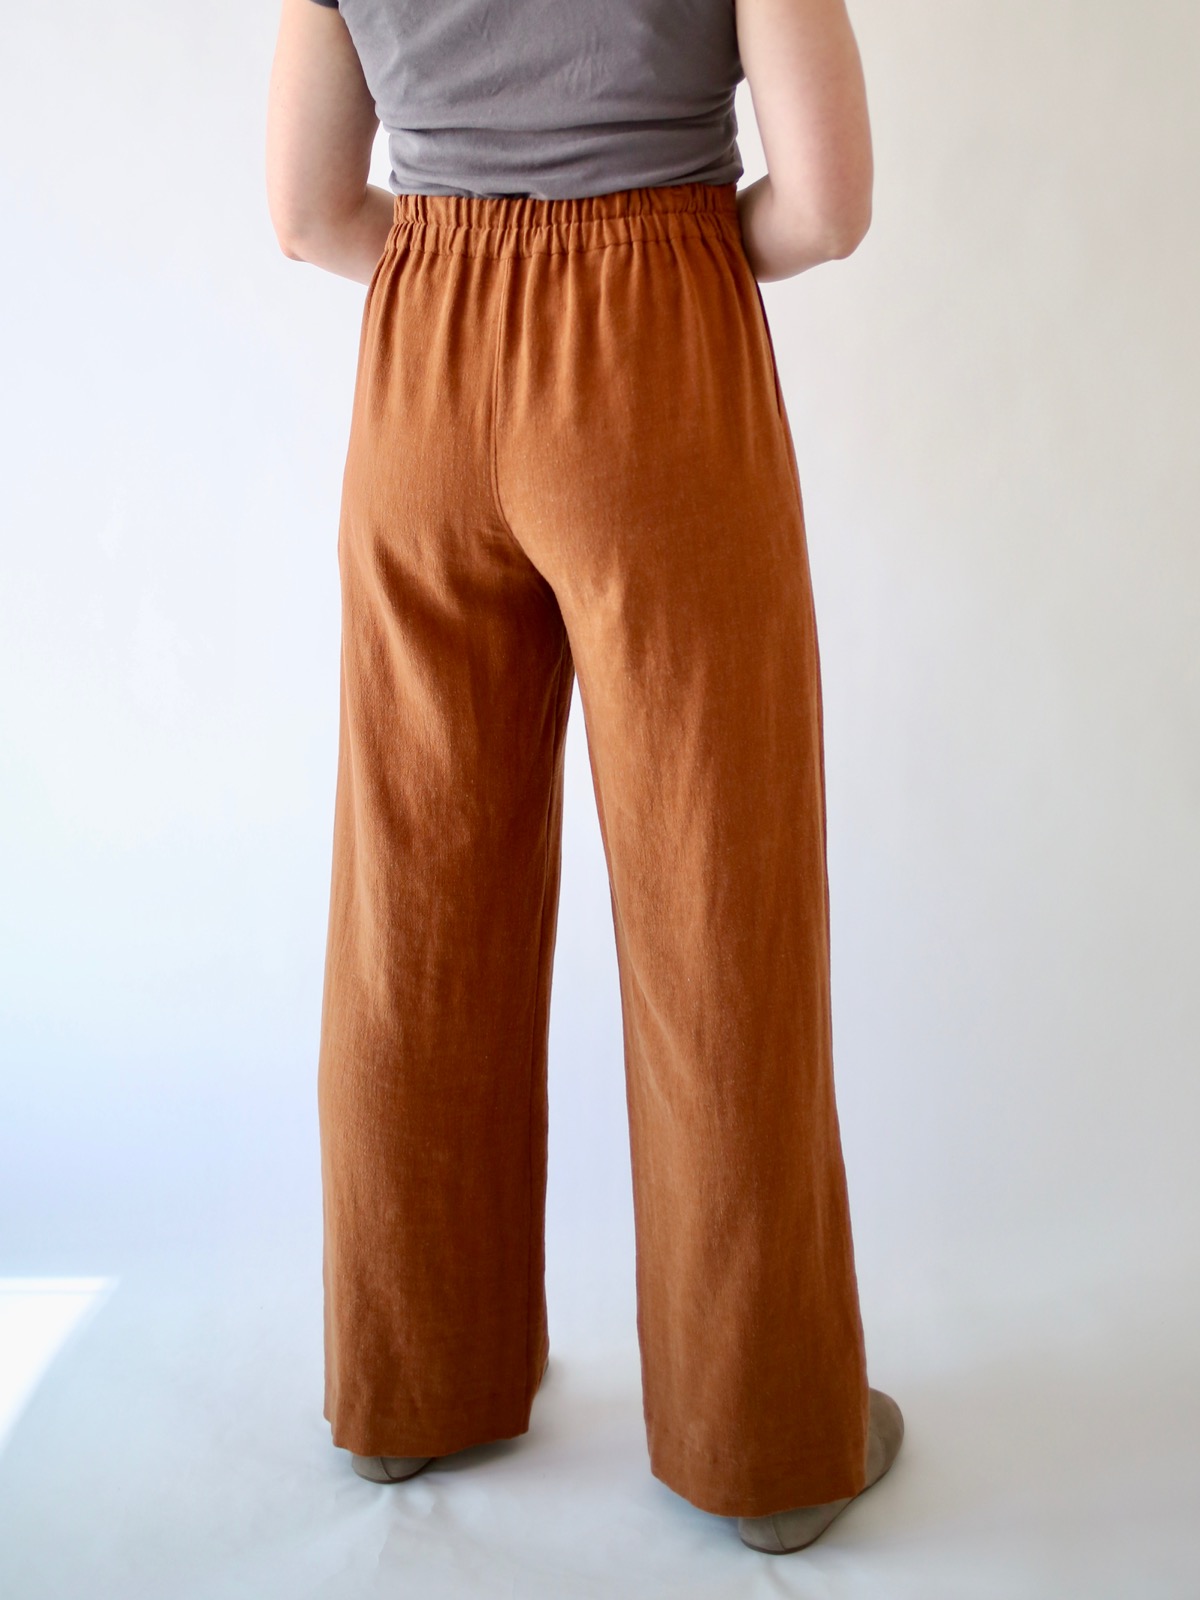 OutTop Linen Cotton Pants for Women's Elastic Waist Pants India | Ubuy